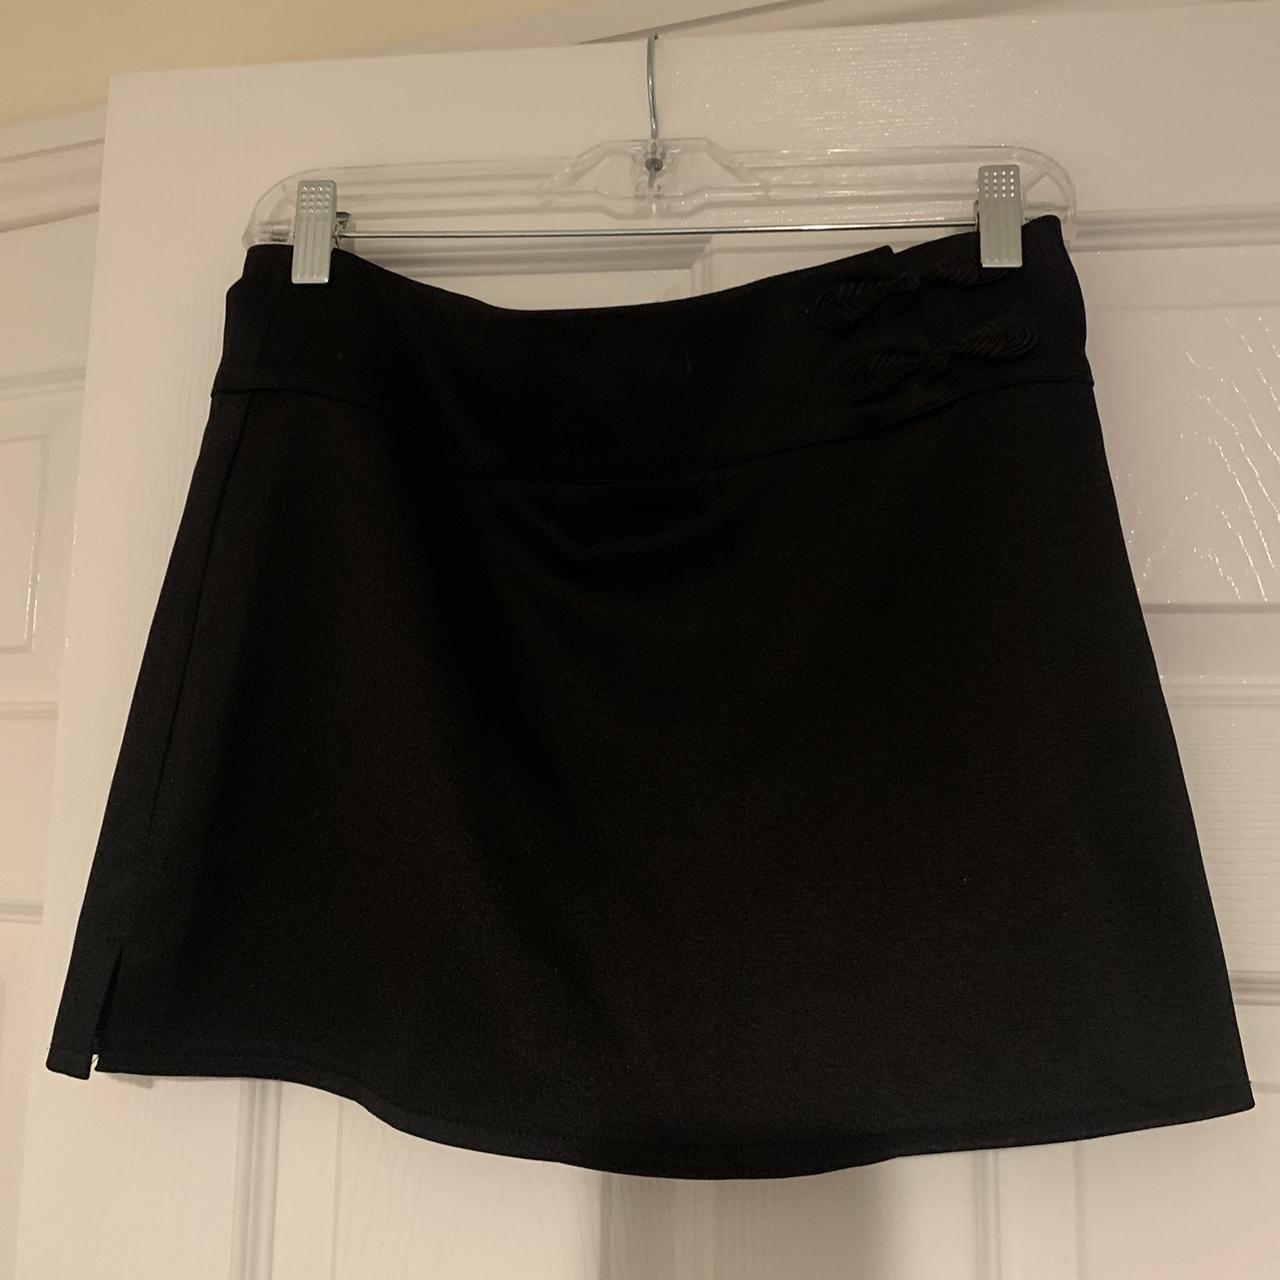 Vintage black mini skirt 🖤 Adorable satin mini... - Depop